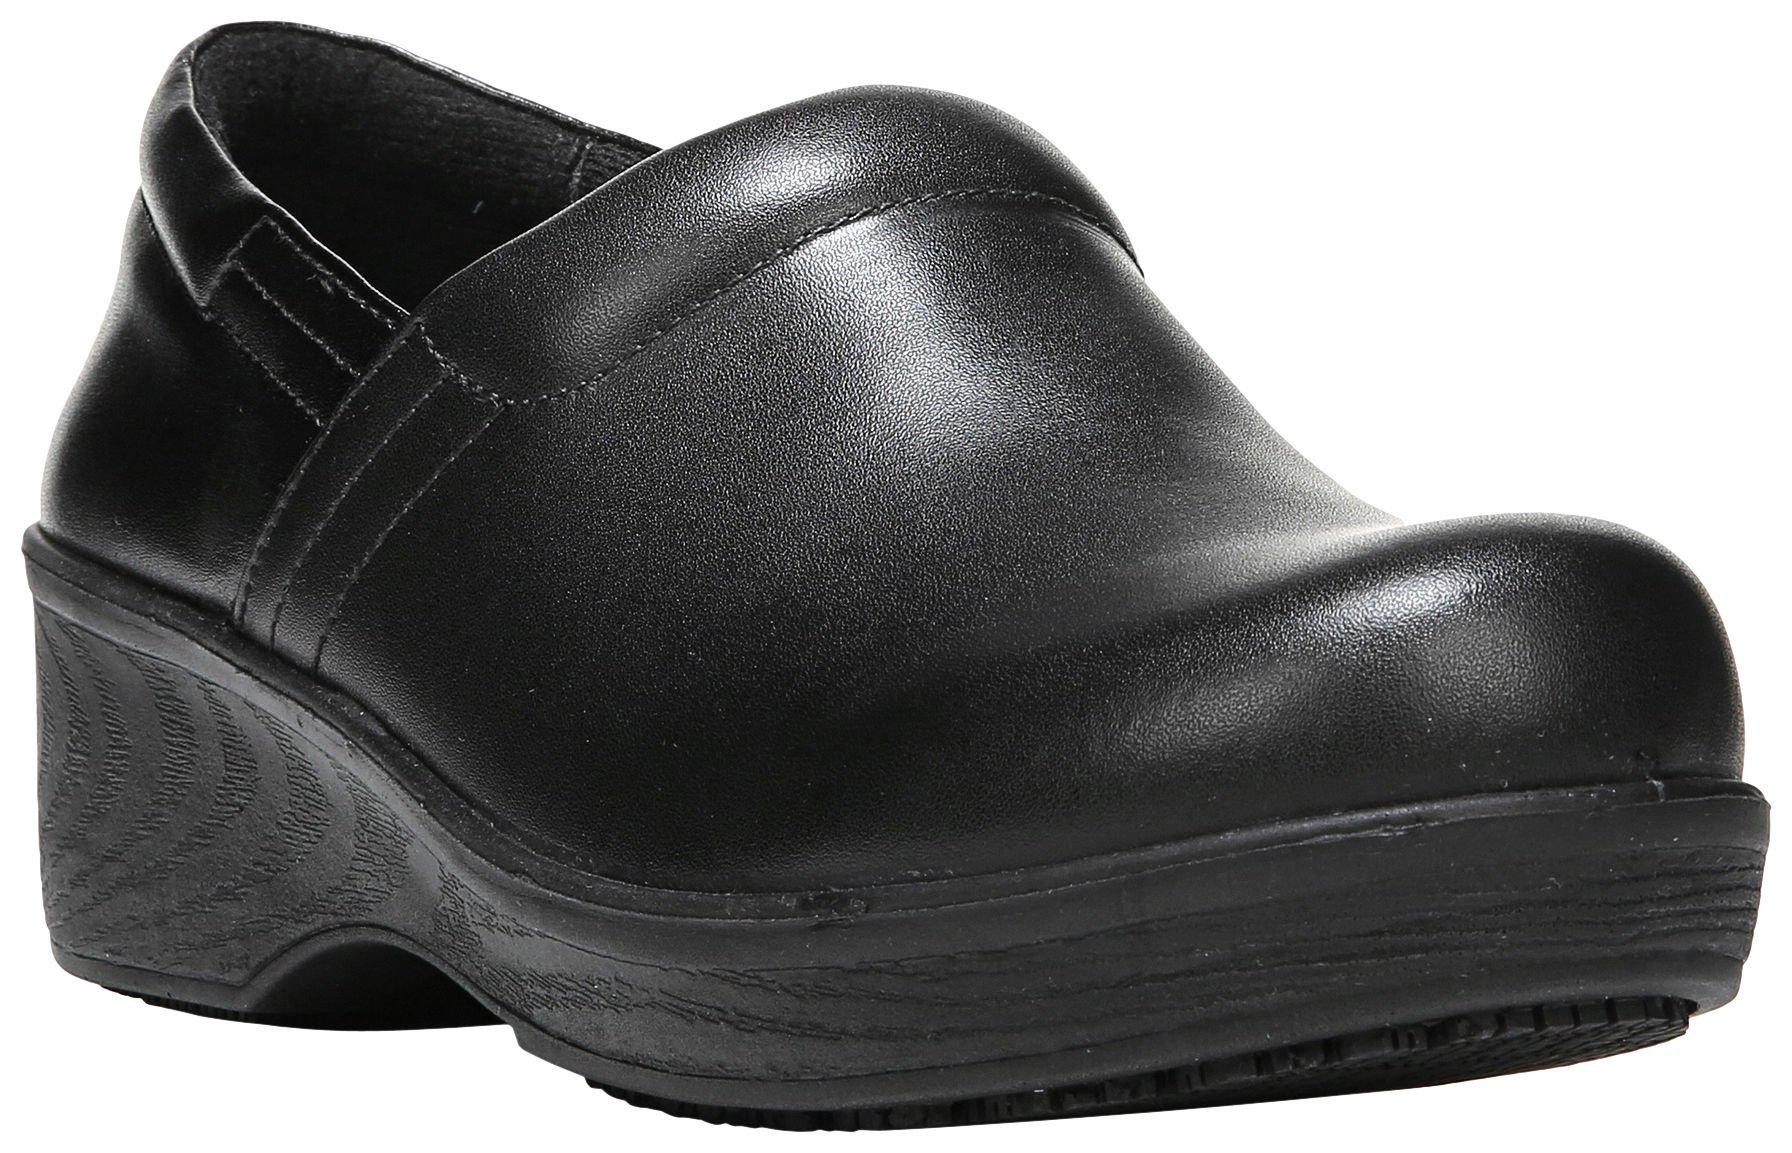 dr scholl's slip resistant work shoes